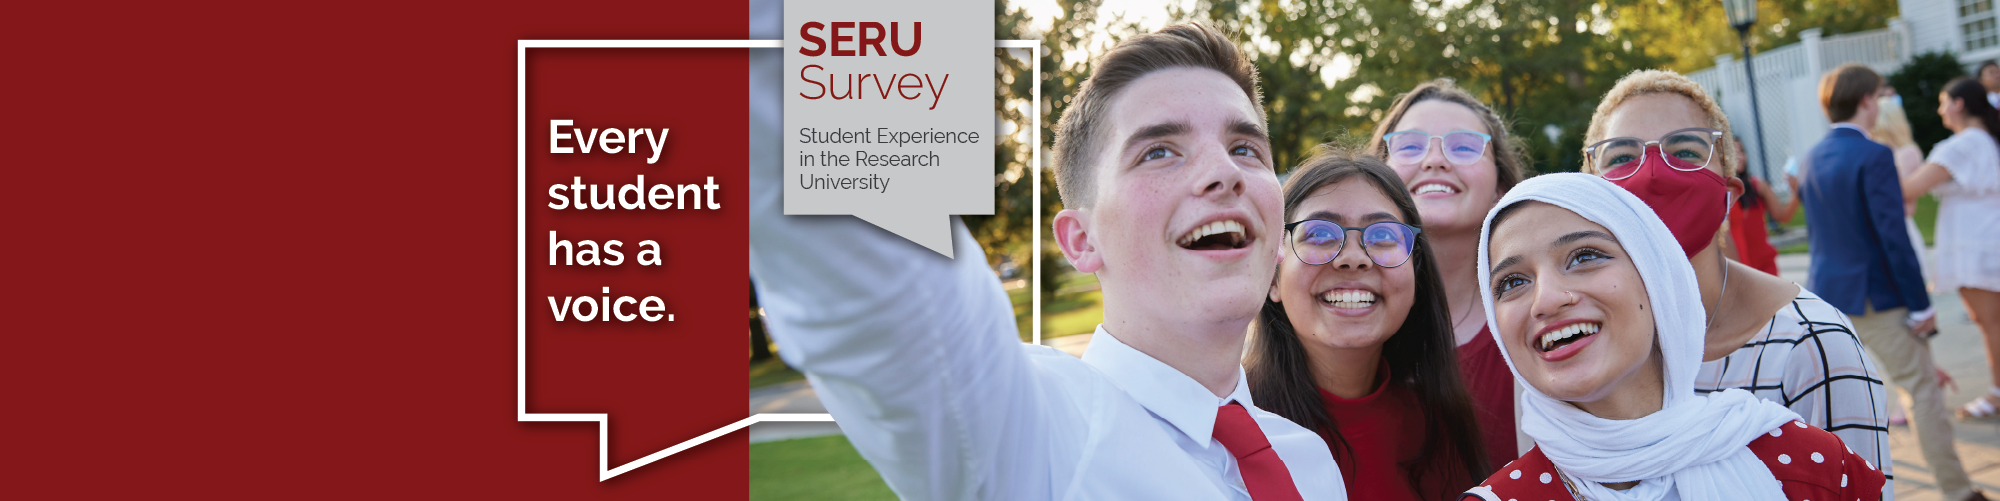 Every student has a voice. ou.edu/seru. SERU Survey, Student Experience in the Research University.